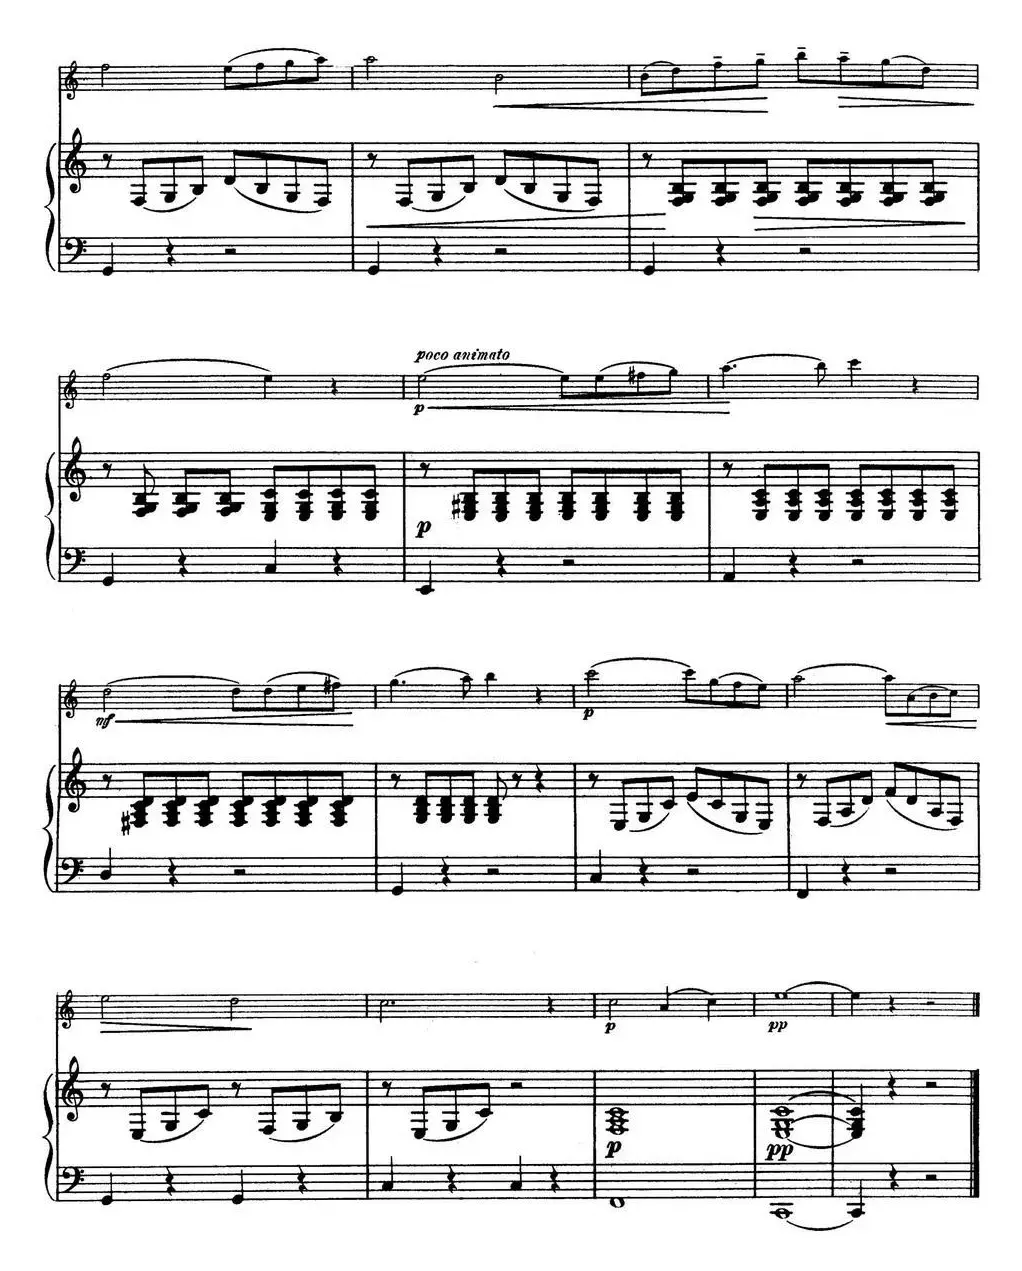 25首小提琴曲合集：Chant d'adieu.（Farewell Song.）（BENONI LAGYE.Op.97）（小提琴+钢琴伴奏）